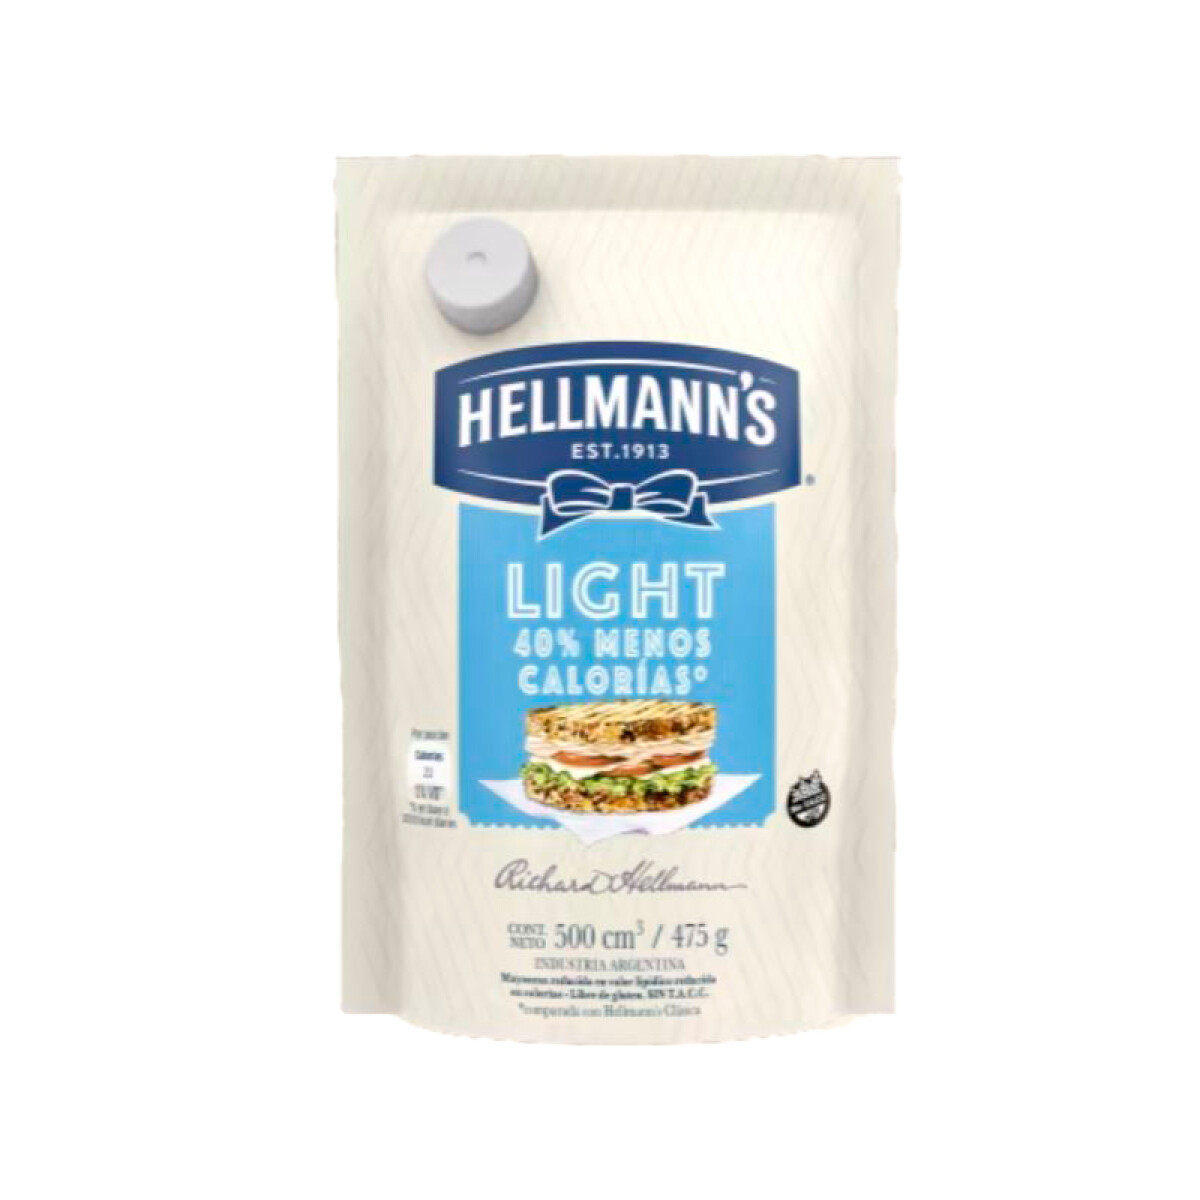 Mayonesa Hellmann's Light - 500 cm3 